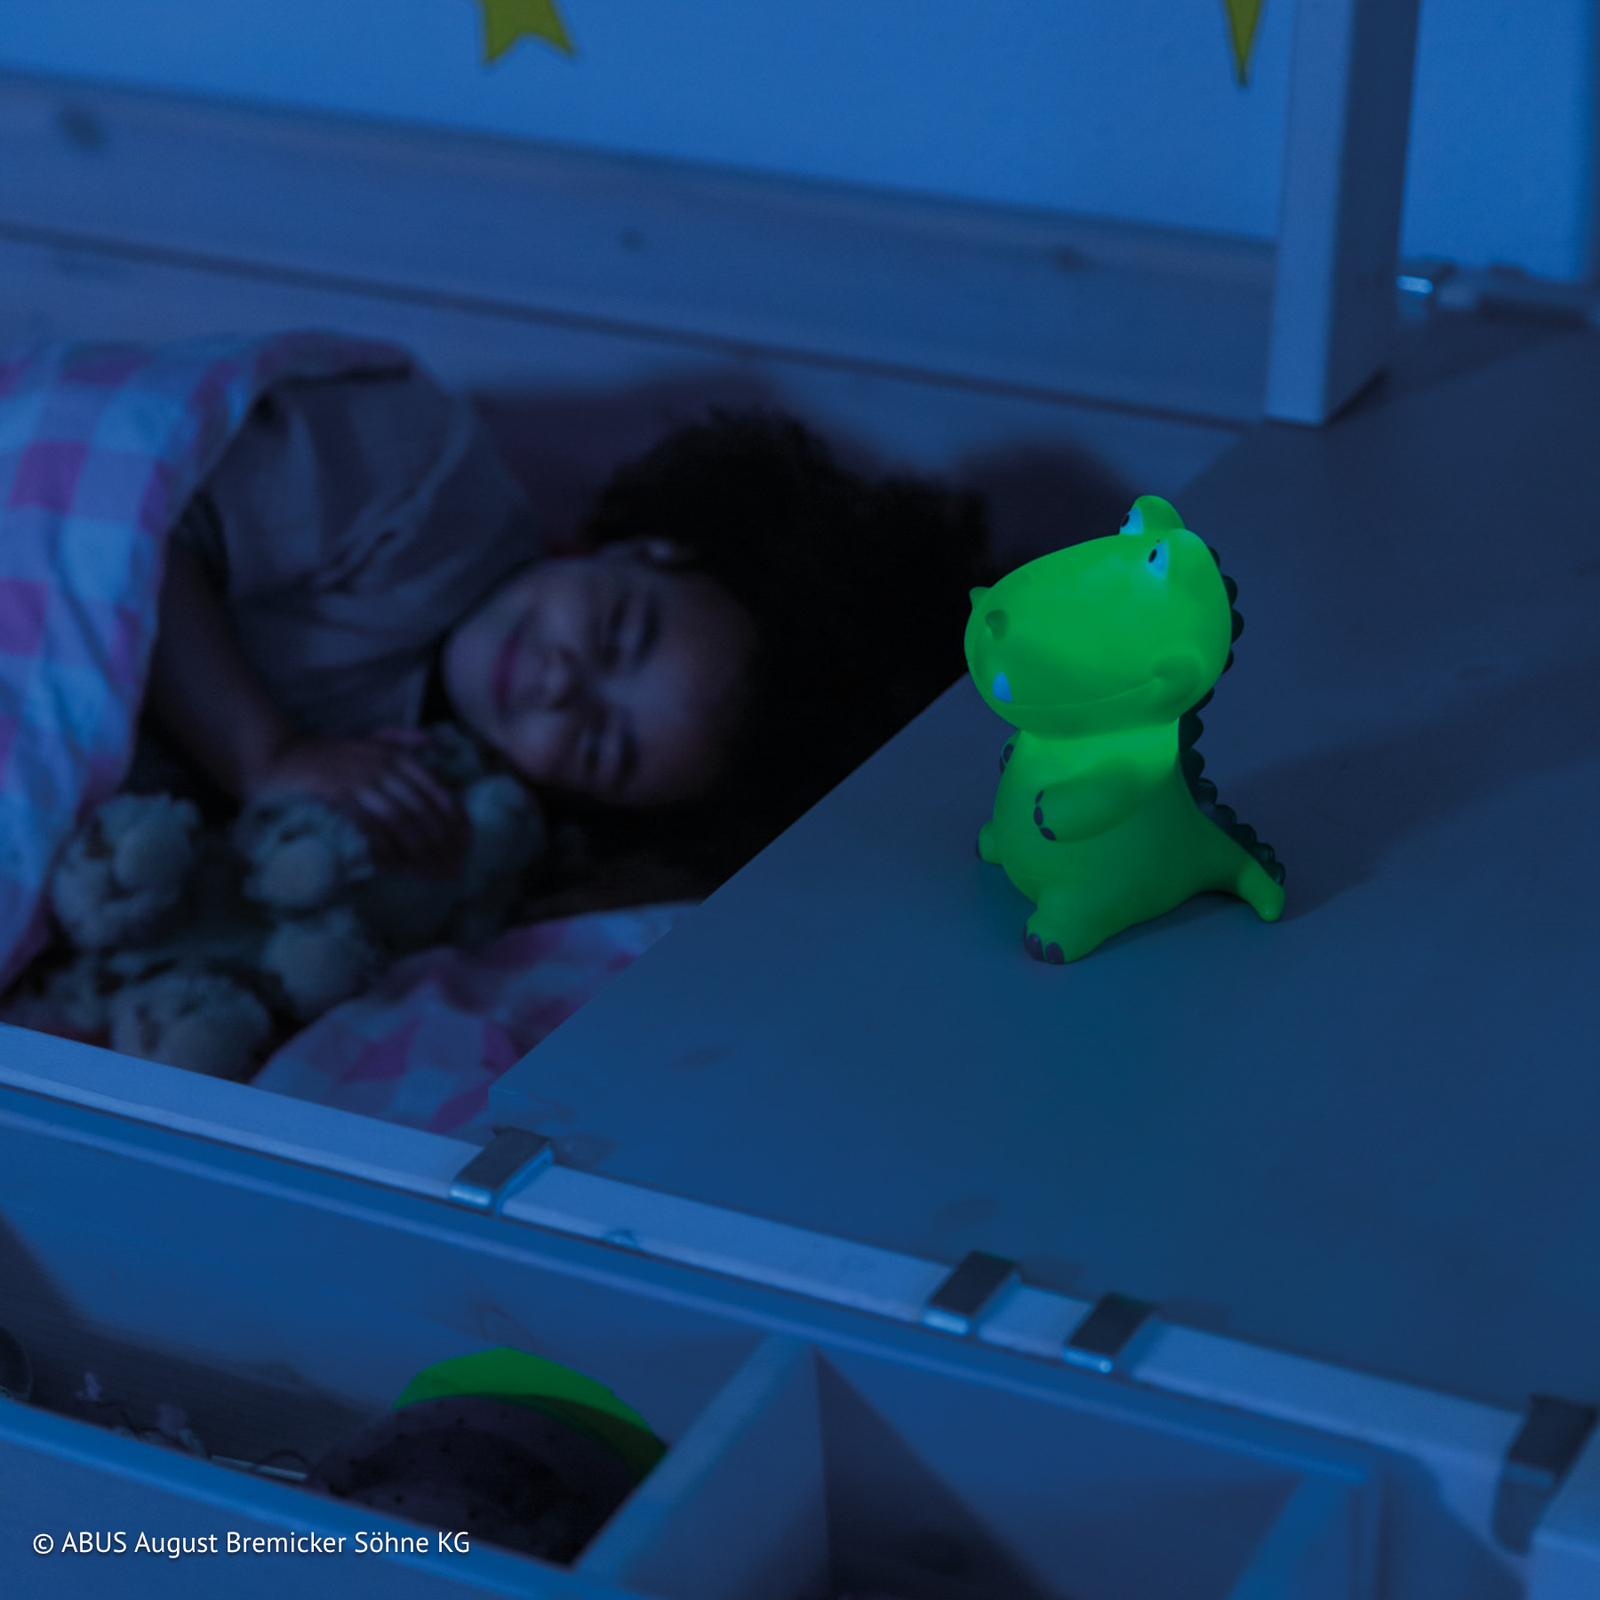 ABUS Dana LED-nattlampa i krokodilform